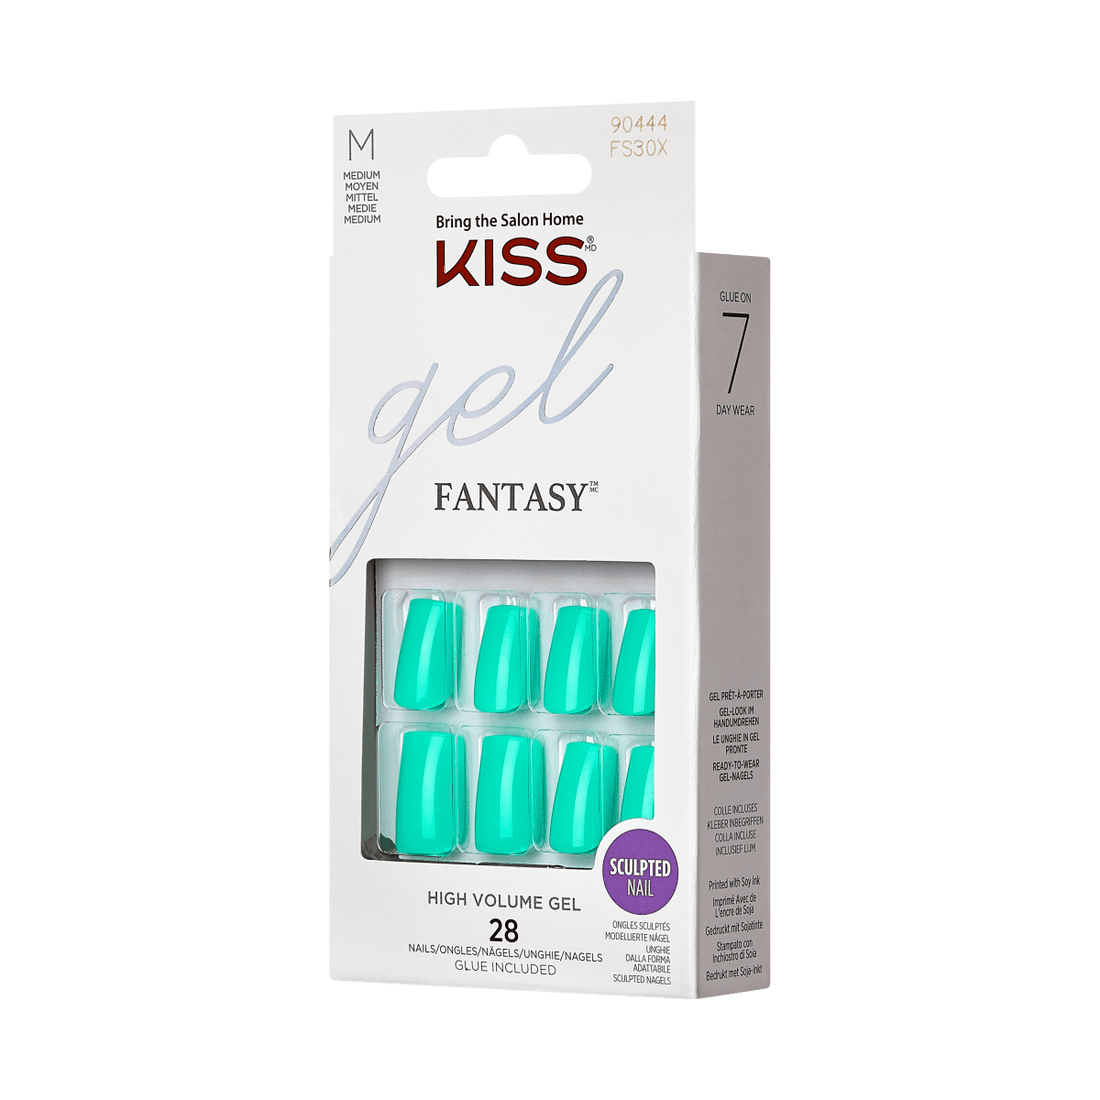 KISS Gel Fantasy, Press-On Nails, Saturn, Green, Med Square, 28ct